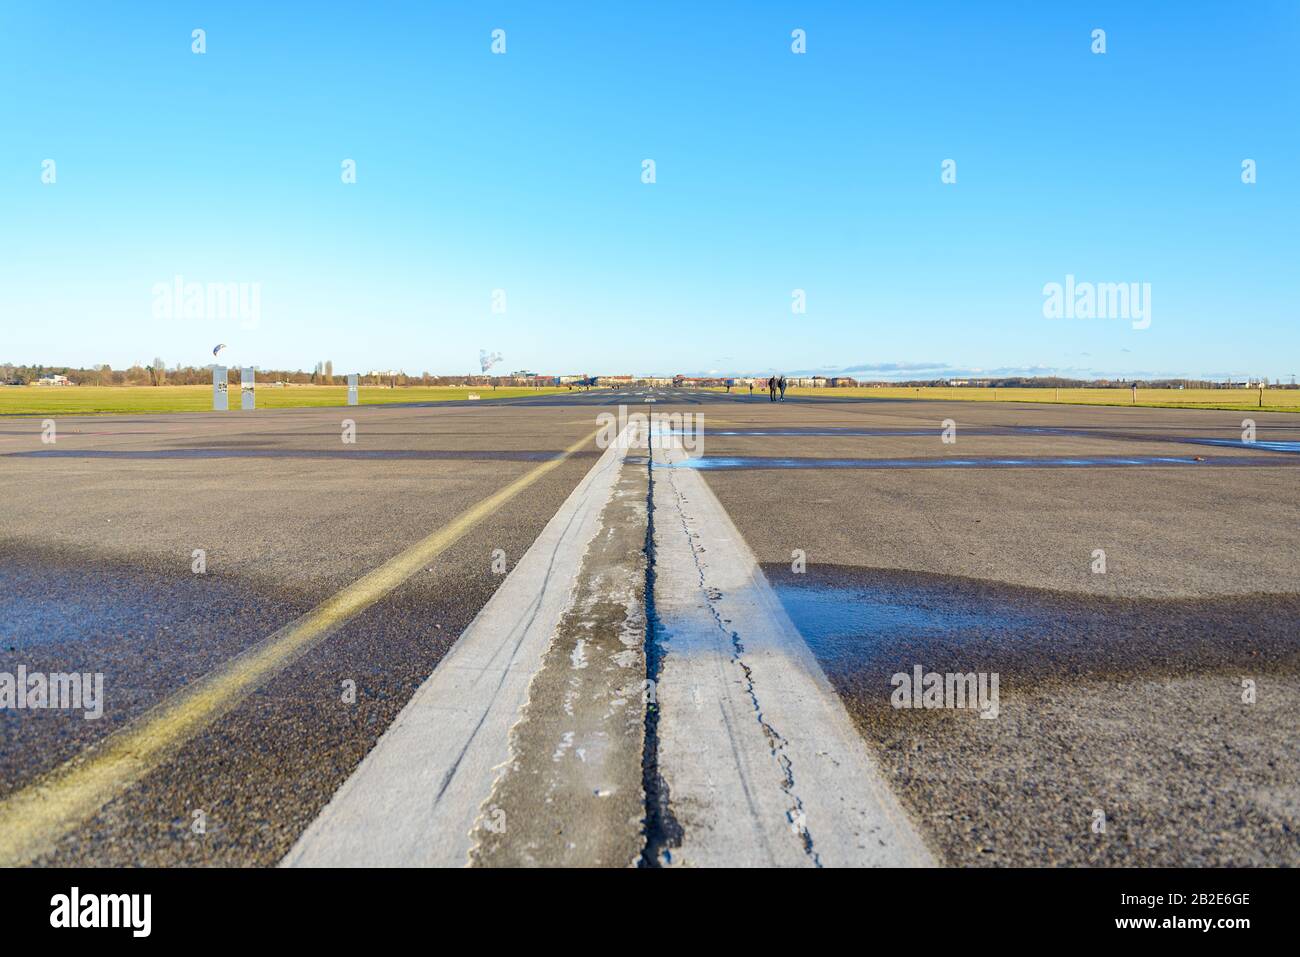 Cracking asphalt road, airport runway or airfield at Tempelhof Field park, former airport, in Berlin, Germany. Stock Photo